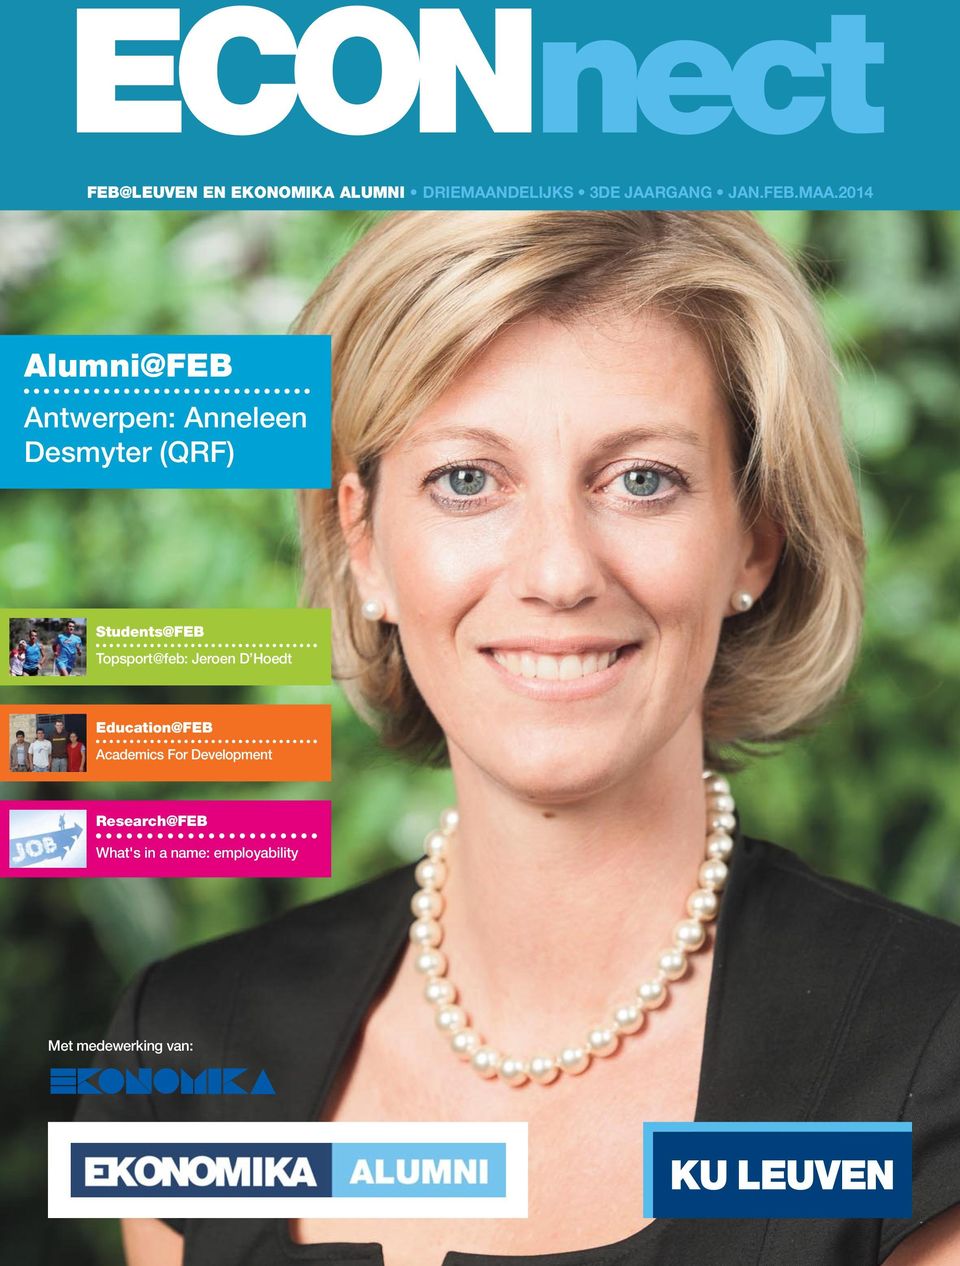 2014 Alumni@FEB Antwerpen: Anneleen Desmyter (QRF) Students@FEB